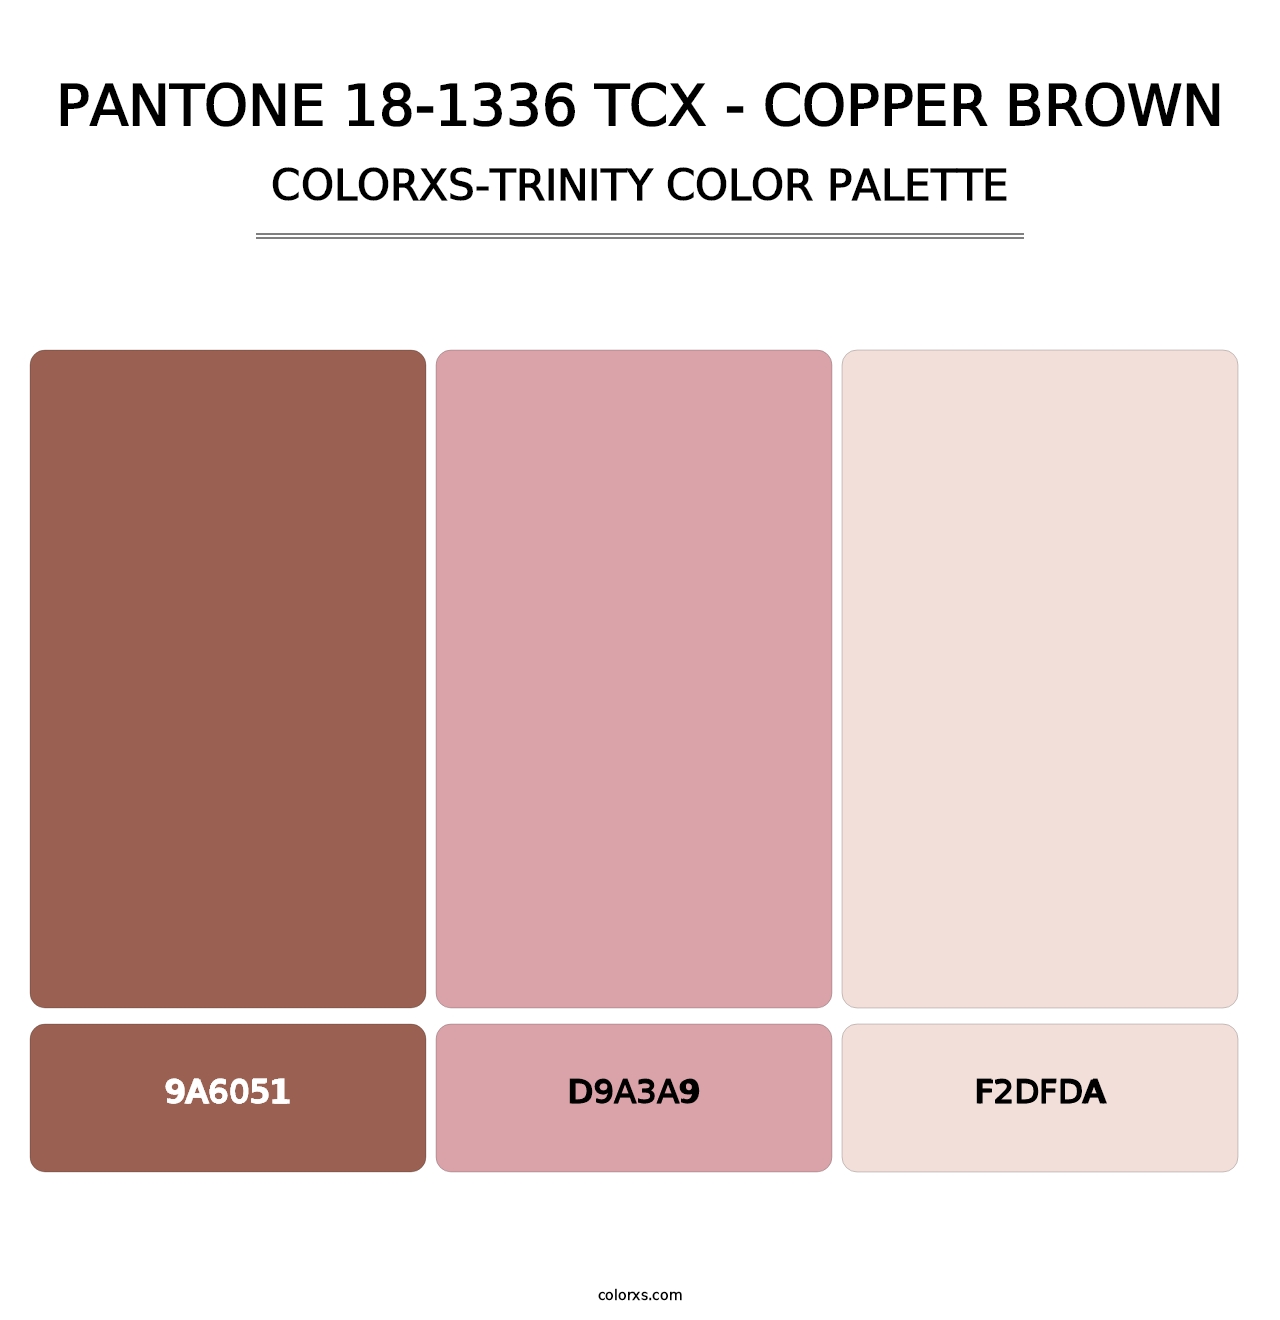 PANTONE 18-1336 TCX - Copper Brown - Colorxs Trinity Palette